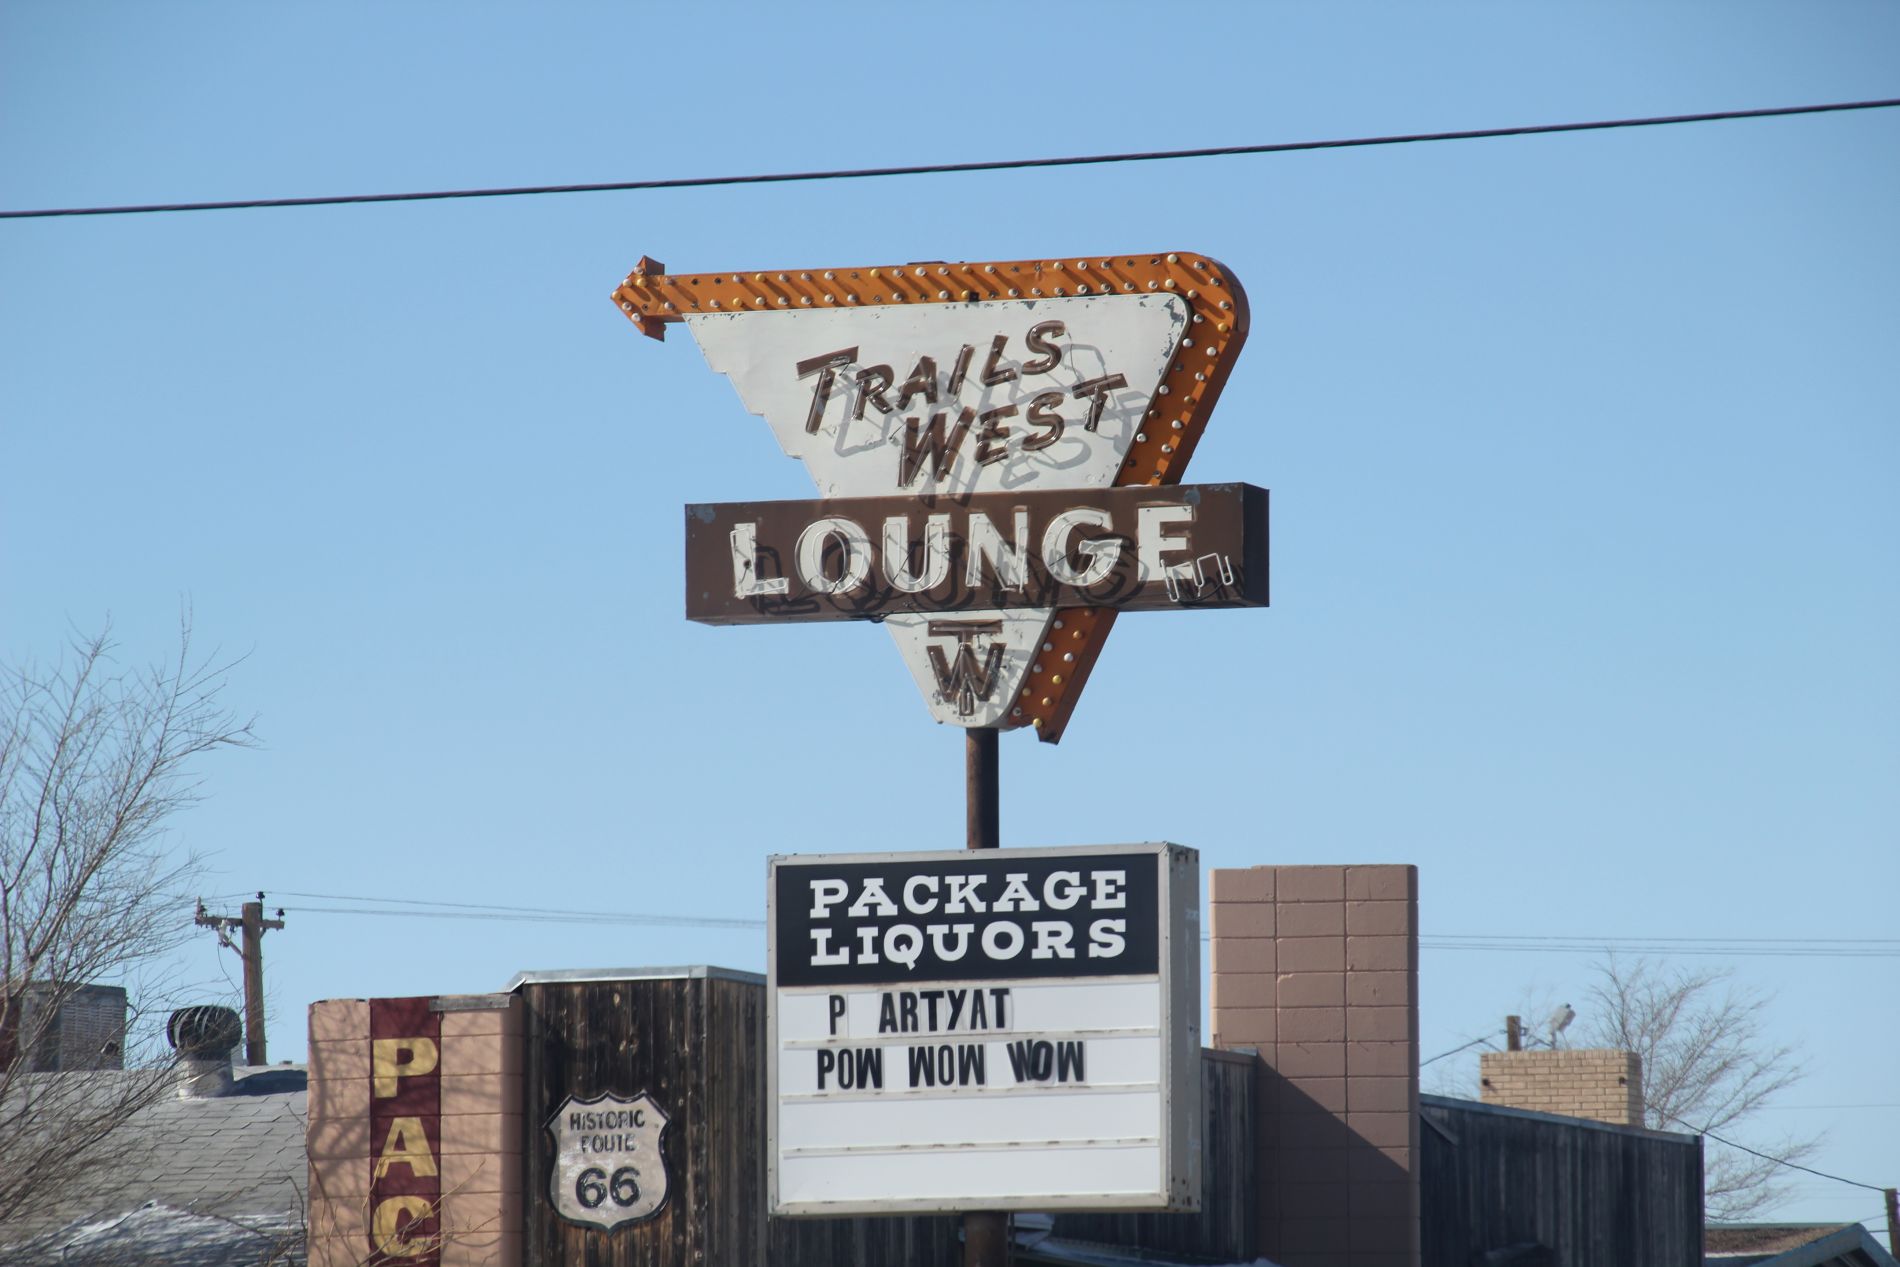 Trails West Lounge in Tucumcari, New Mexico